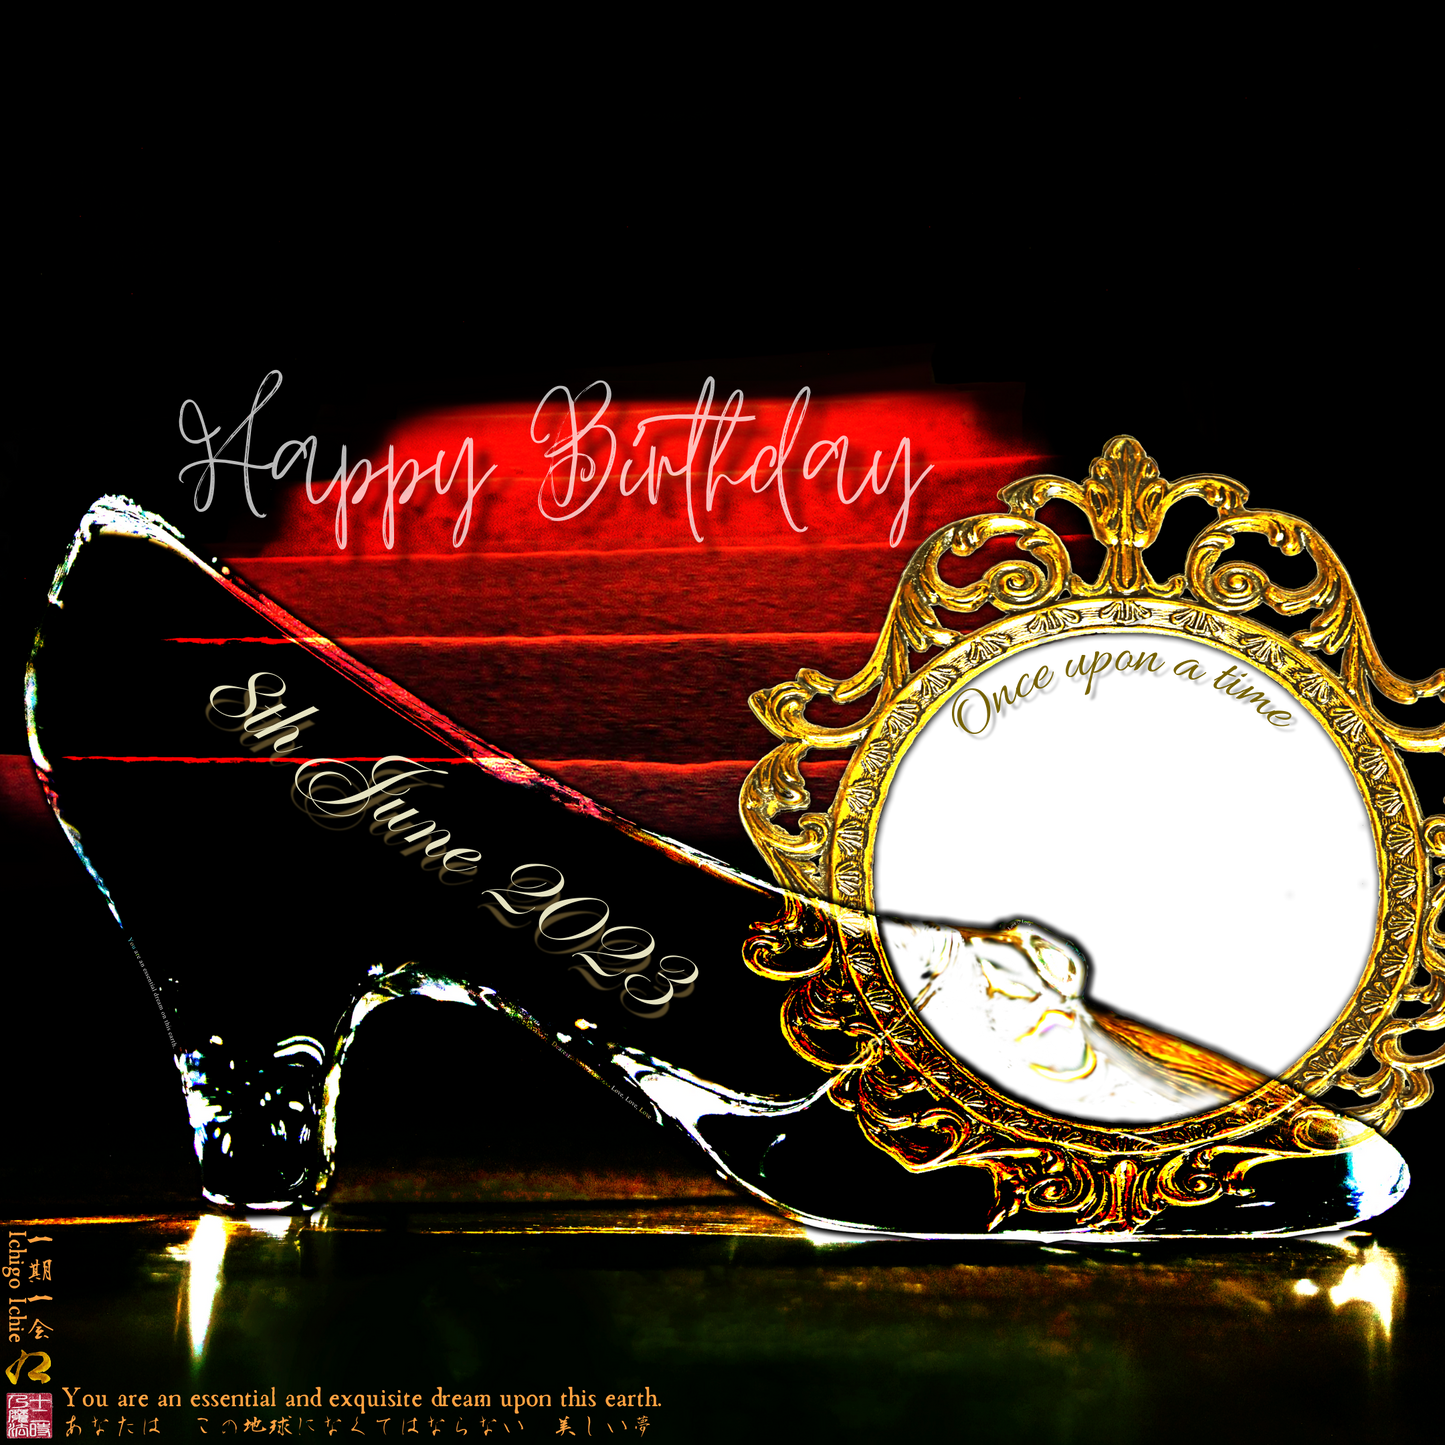 Happy Birthday Glass Slipper "Ichigo Ichie" 8th June 2023 the Right (1-of-1) NFT Art